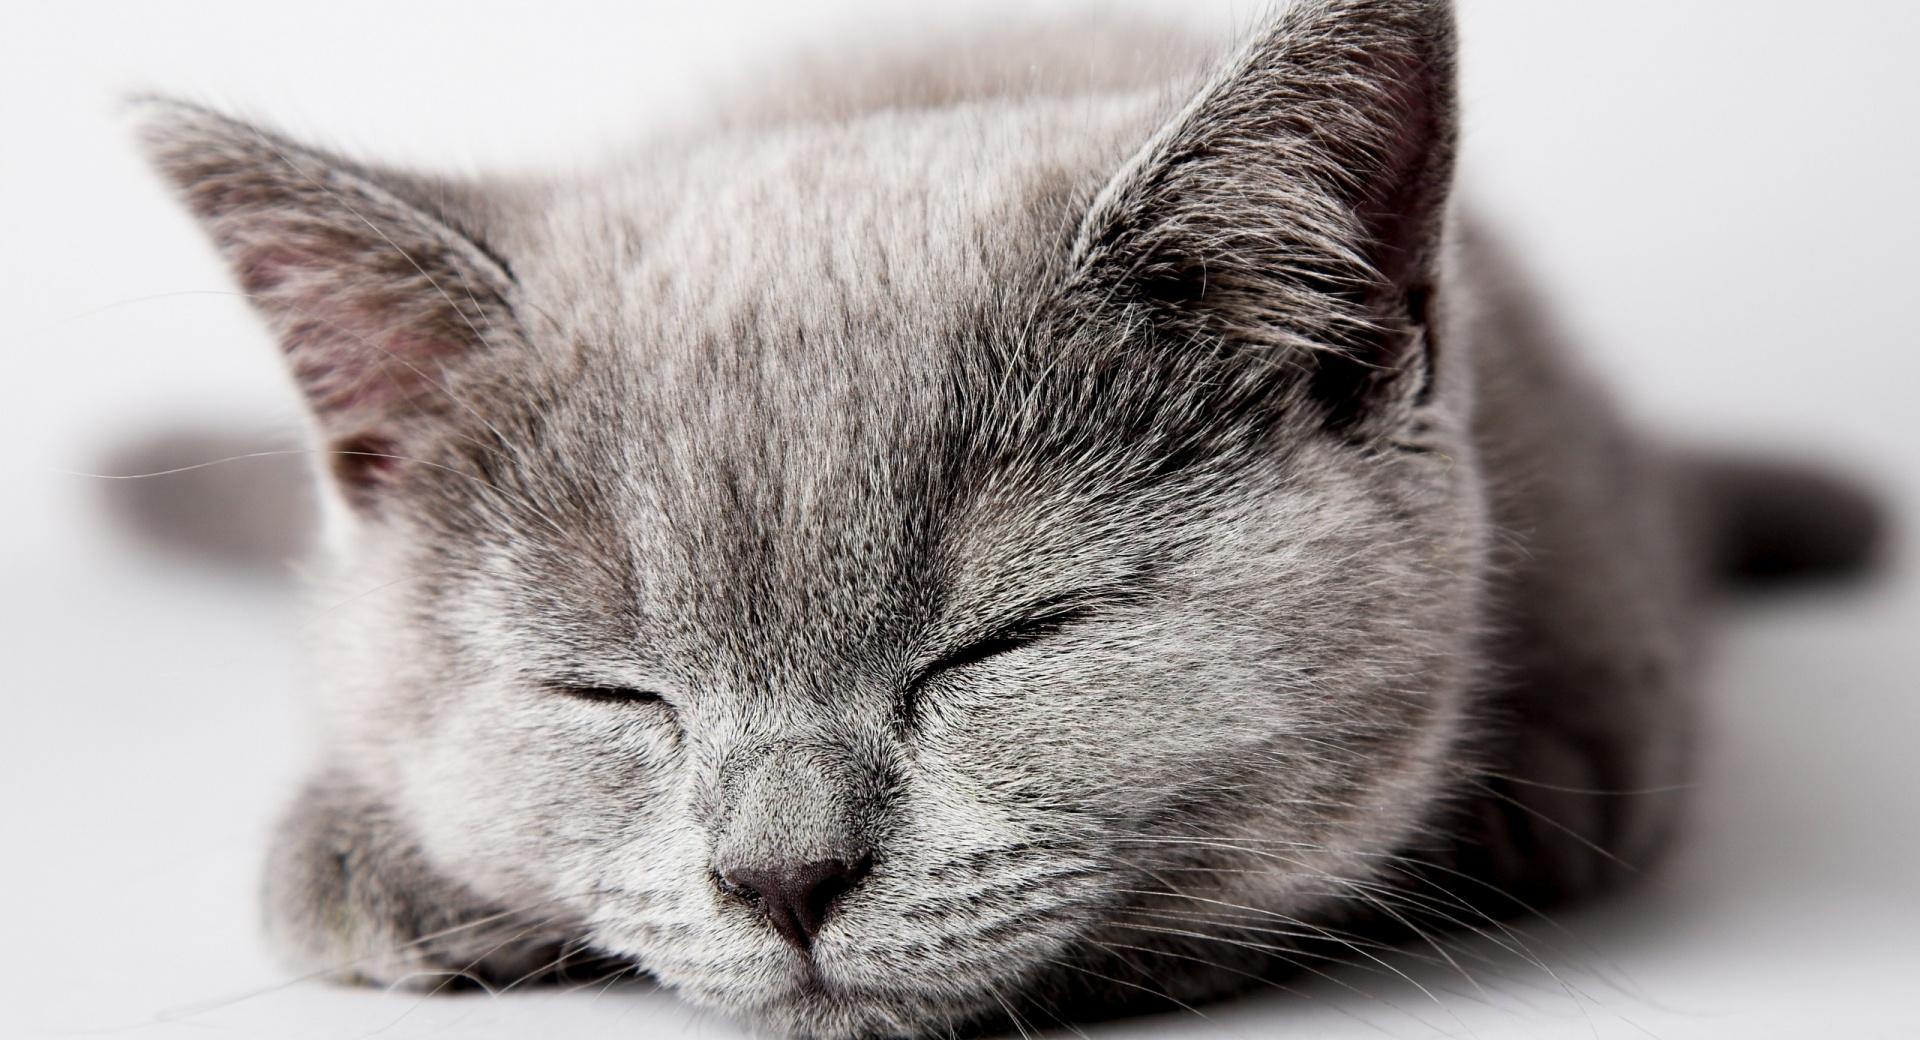 Sleepy Grey Kitten wallpapers HD quality